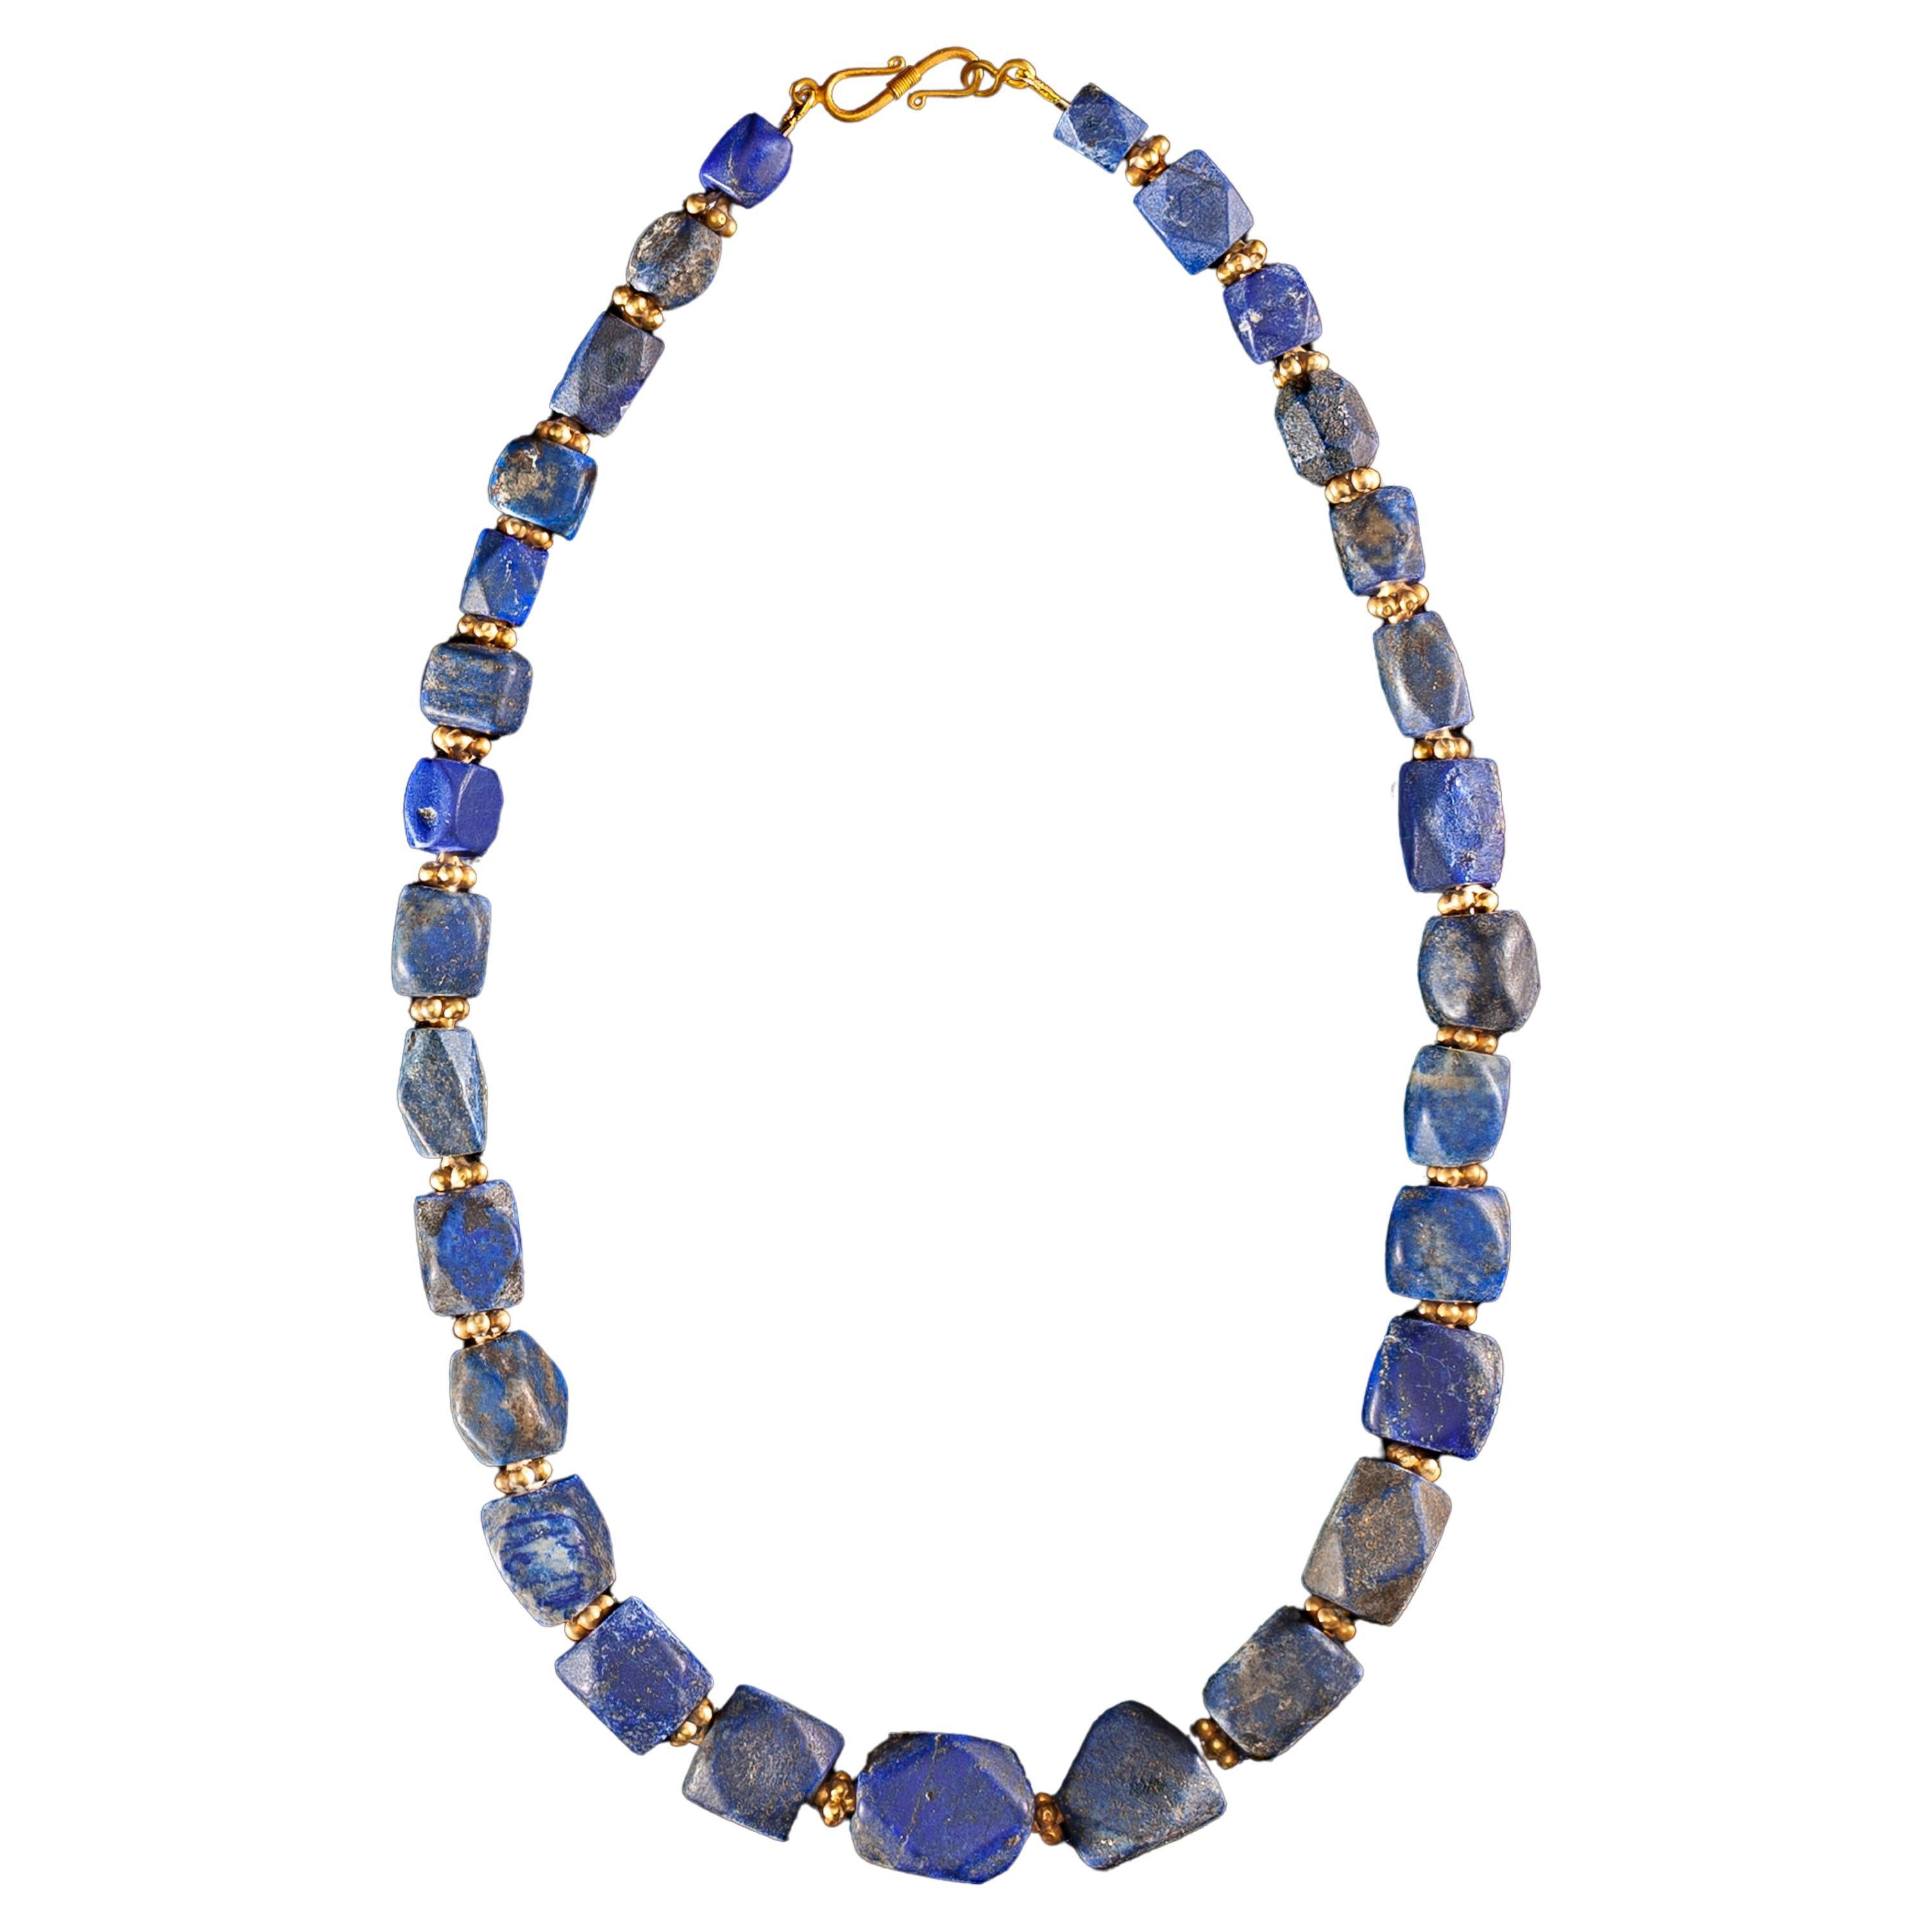 Ancient Bactrian Lapis Lazuli Necklace with 18 Carat Clasp